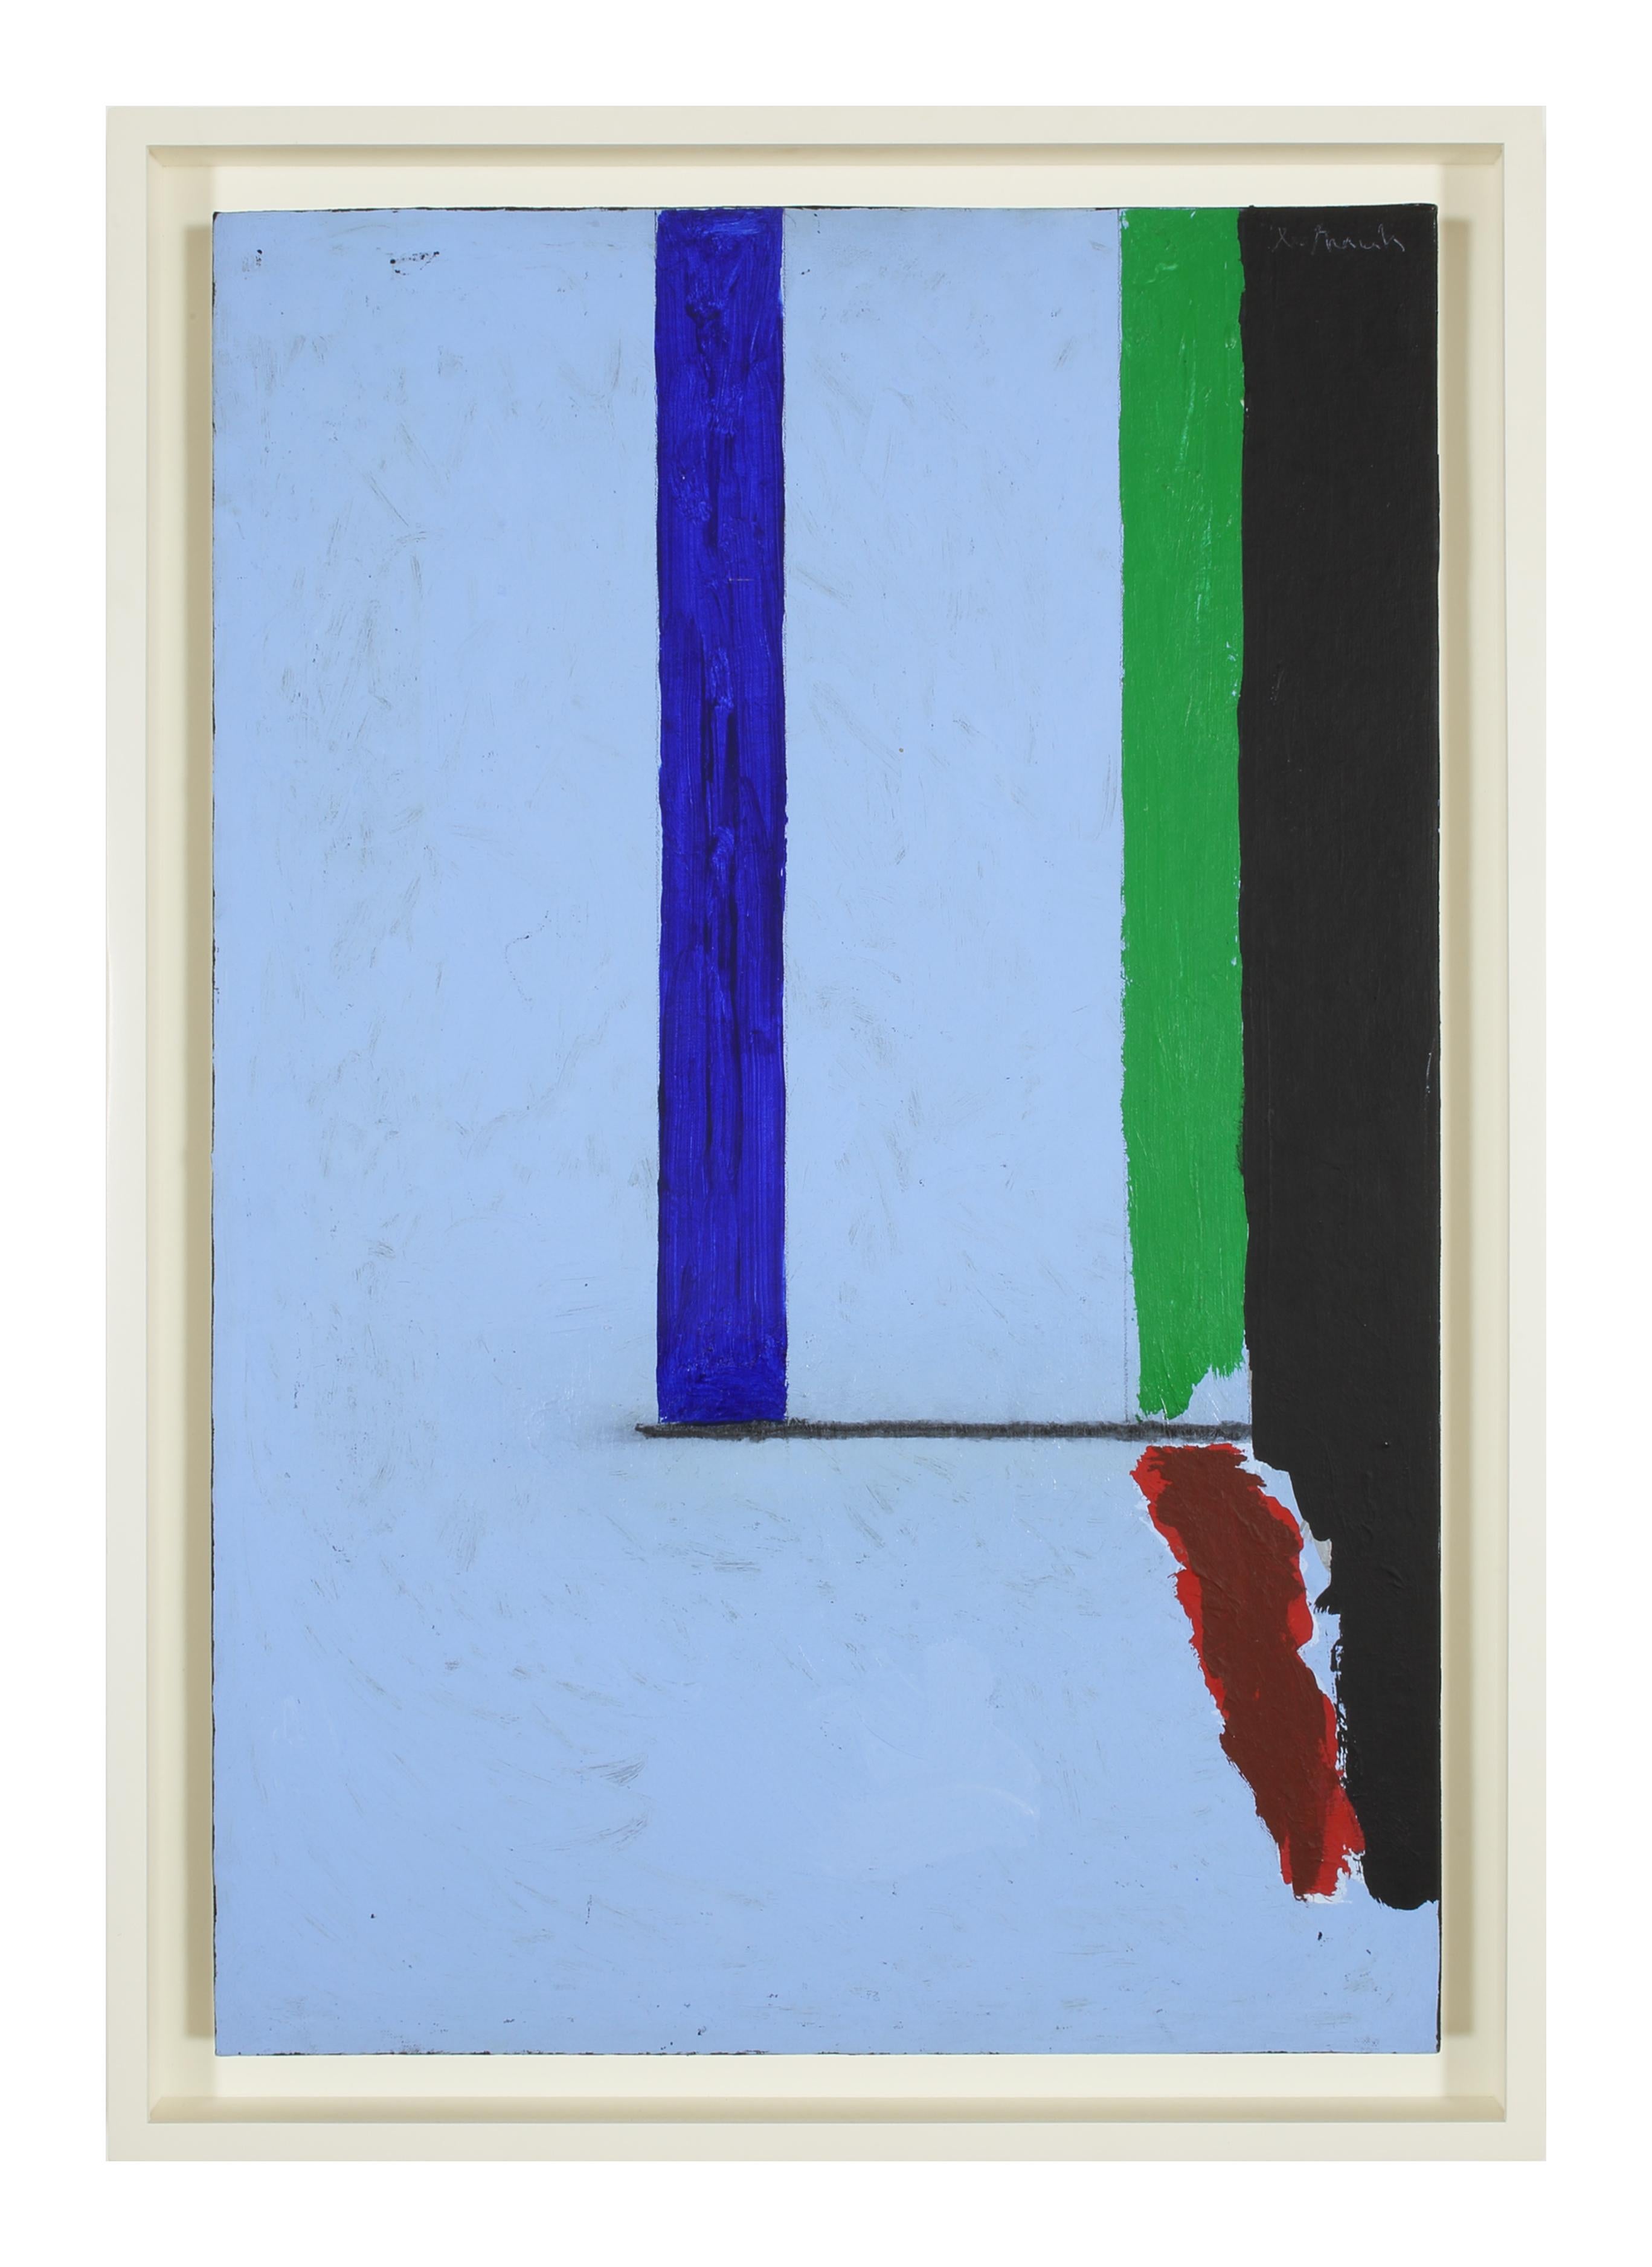 Ouvert n° 125 : Jeannie - Expressionnisme abstrait Painting par Robert Motherwell